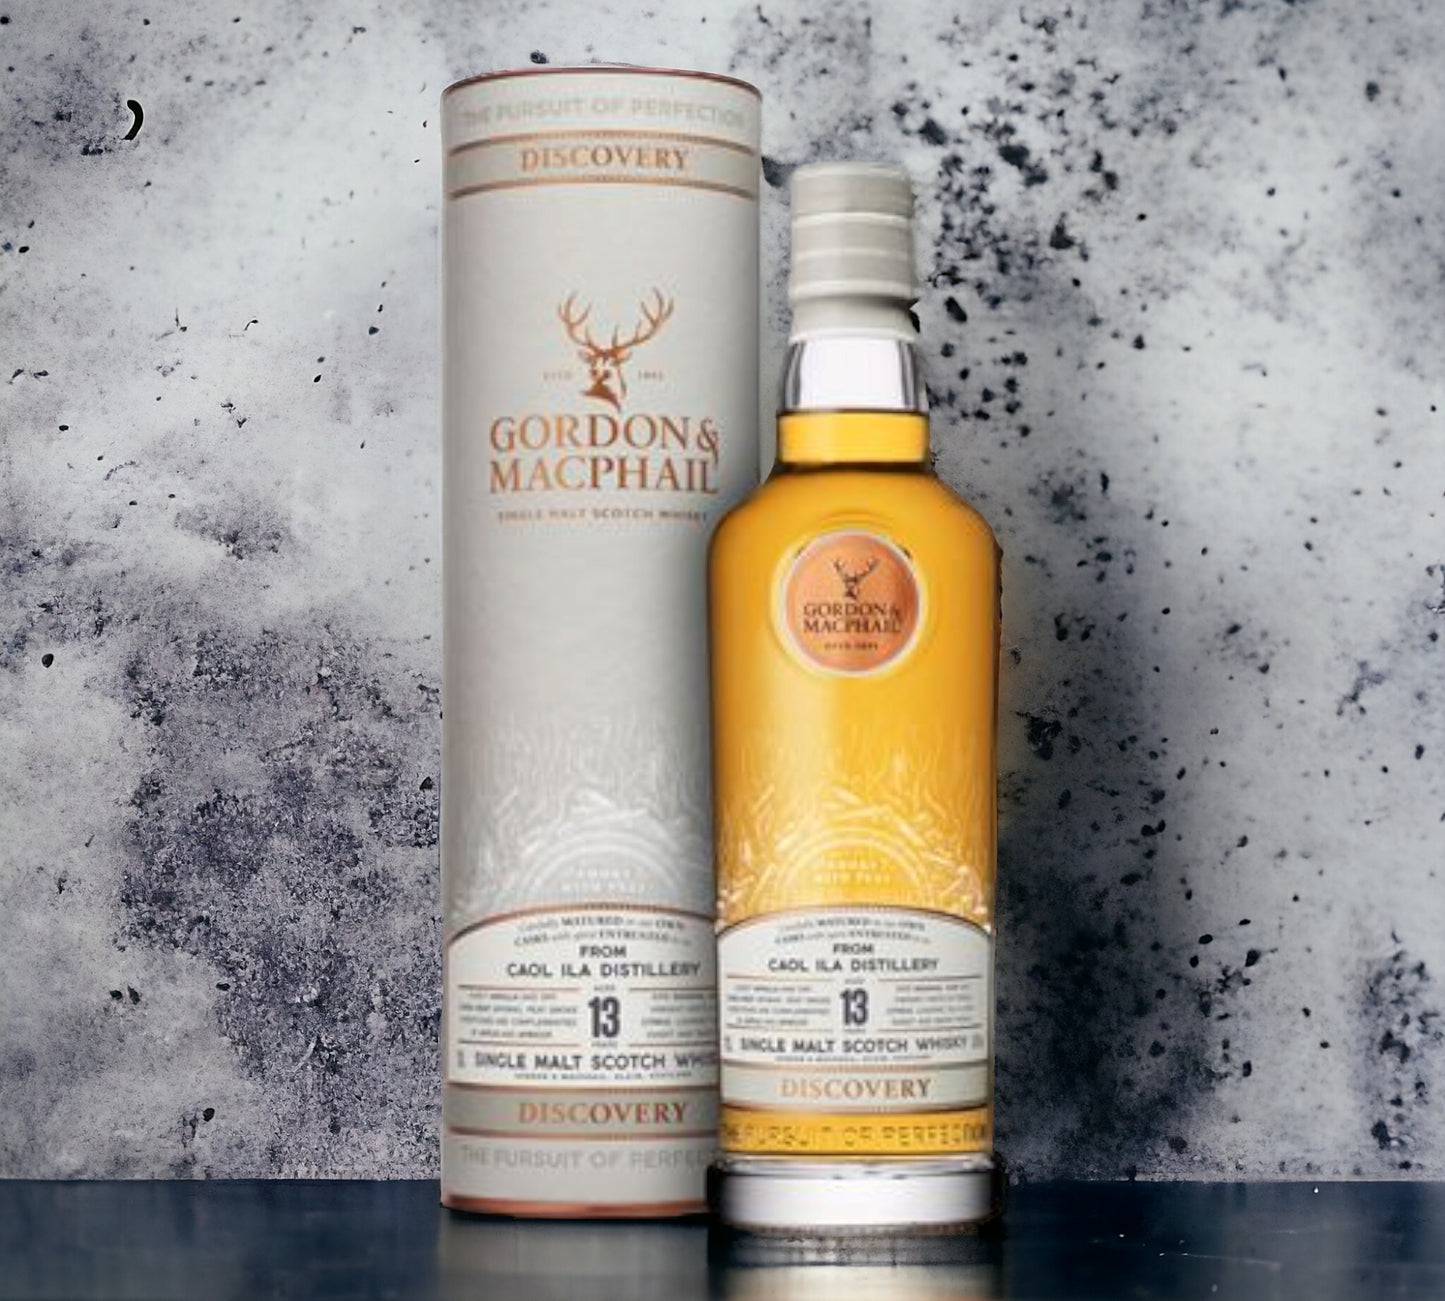 Gordon & MacPhail Discovery Caol Ila 13 Year Old 43% 70cl whisky Caol Ila